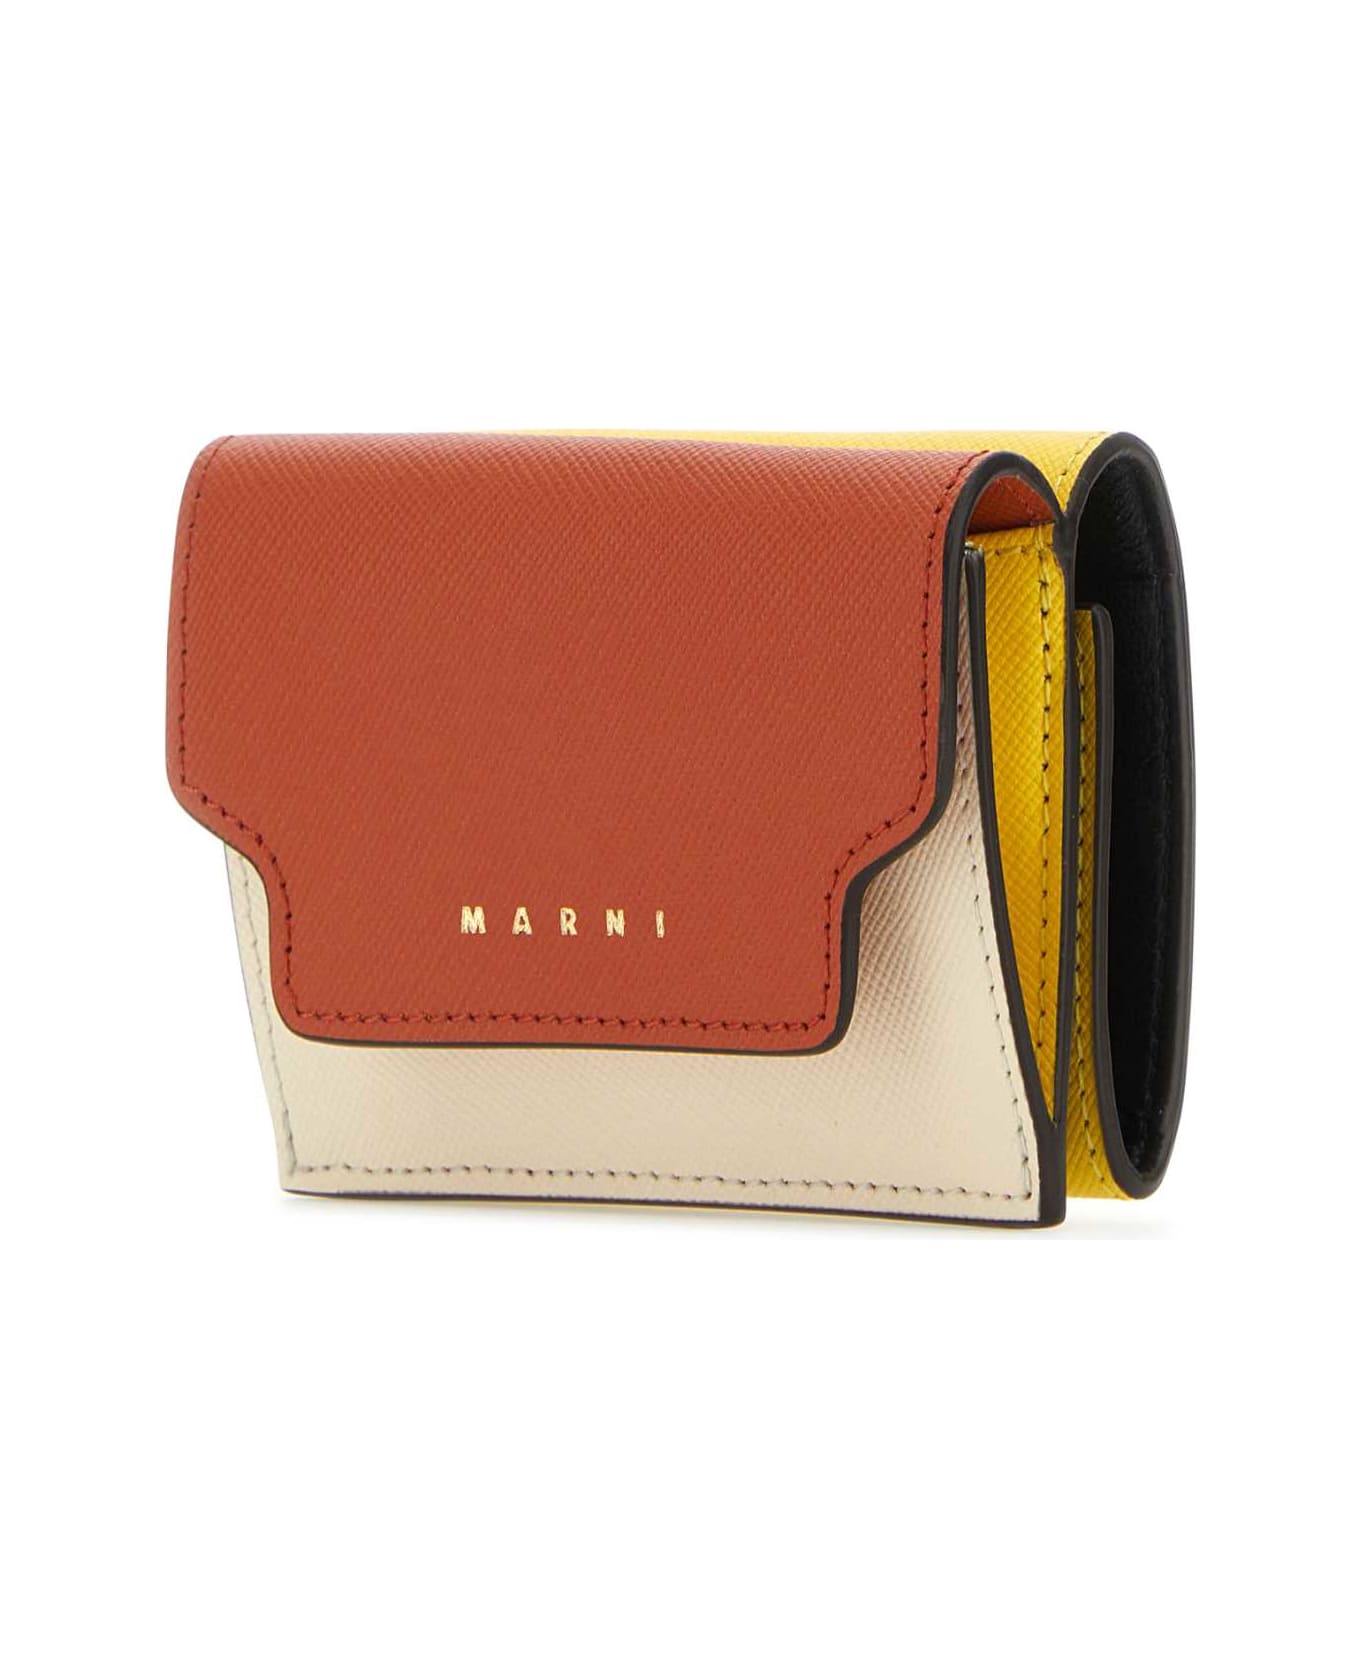 Marni Multicolor Leather Wallet - TABASCOTALCLEMON 財布